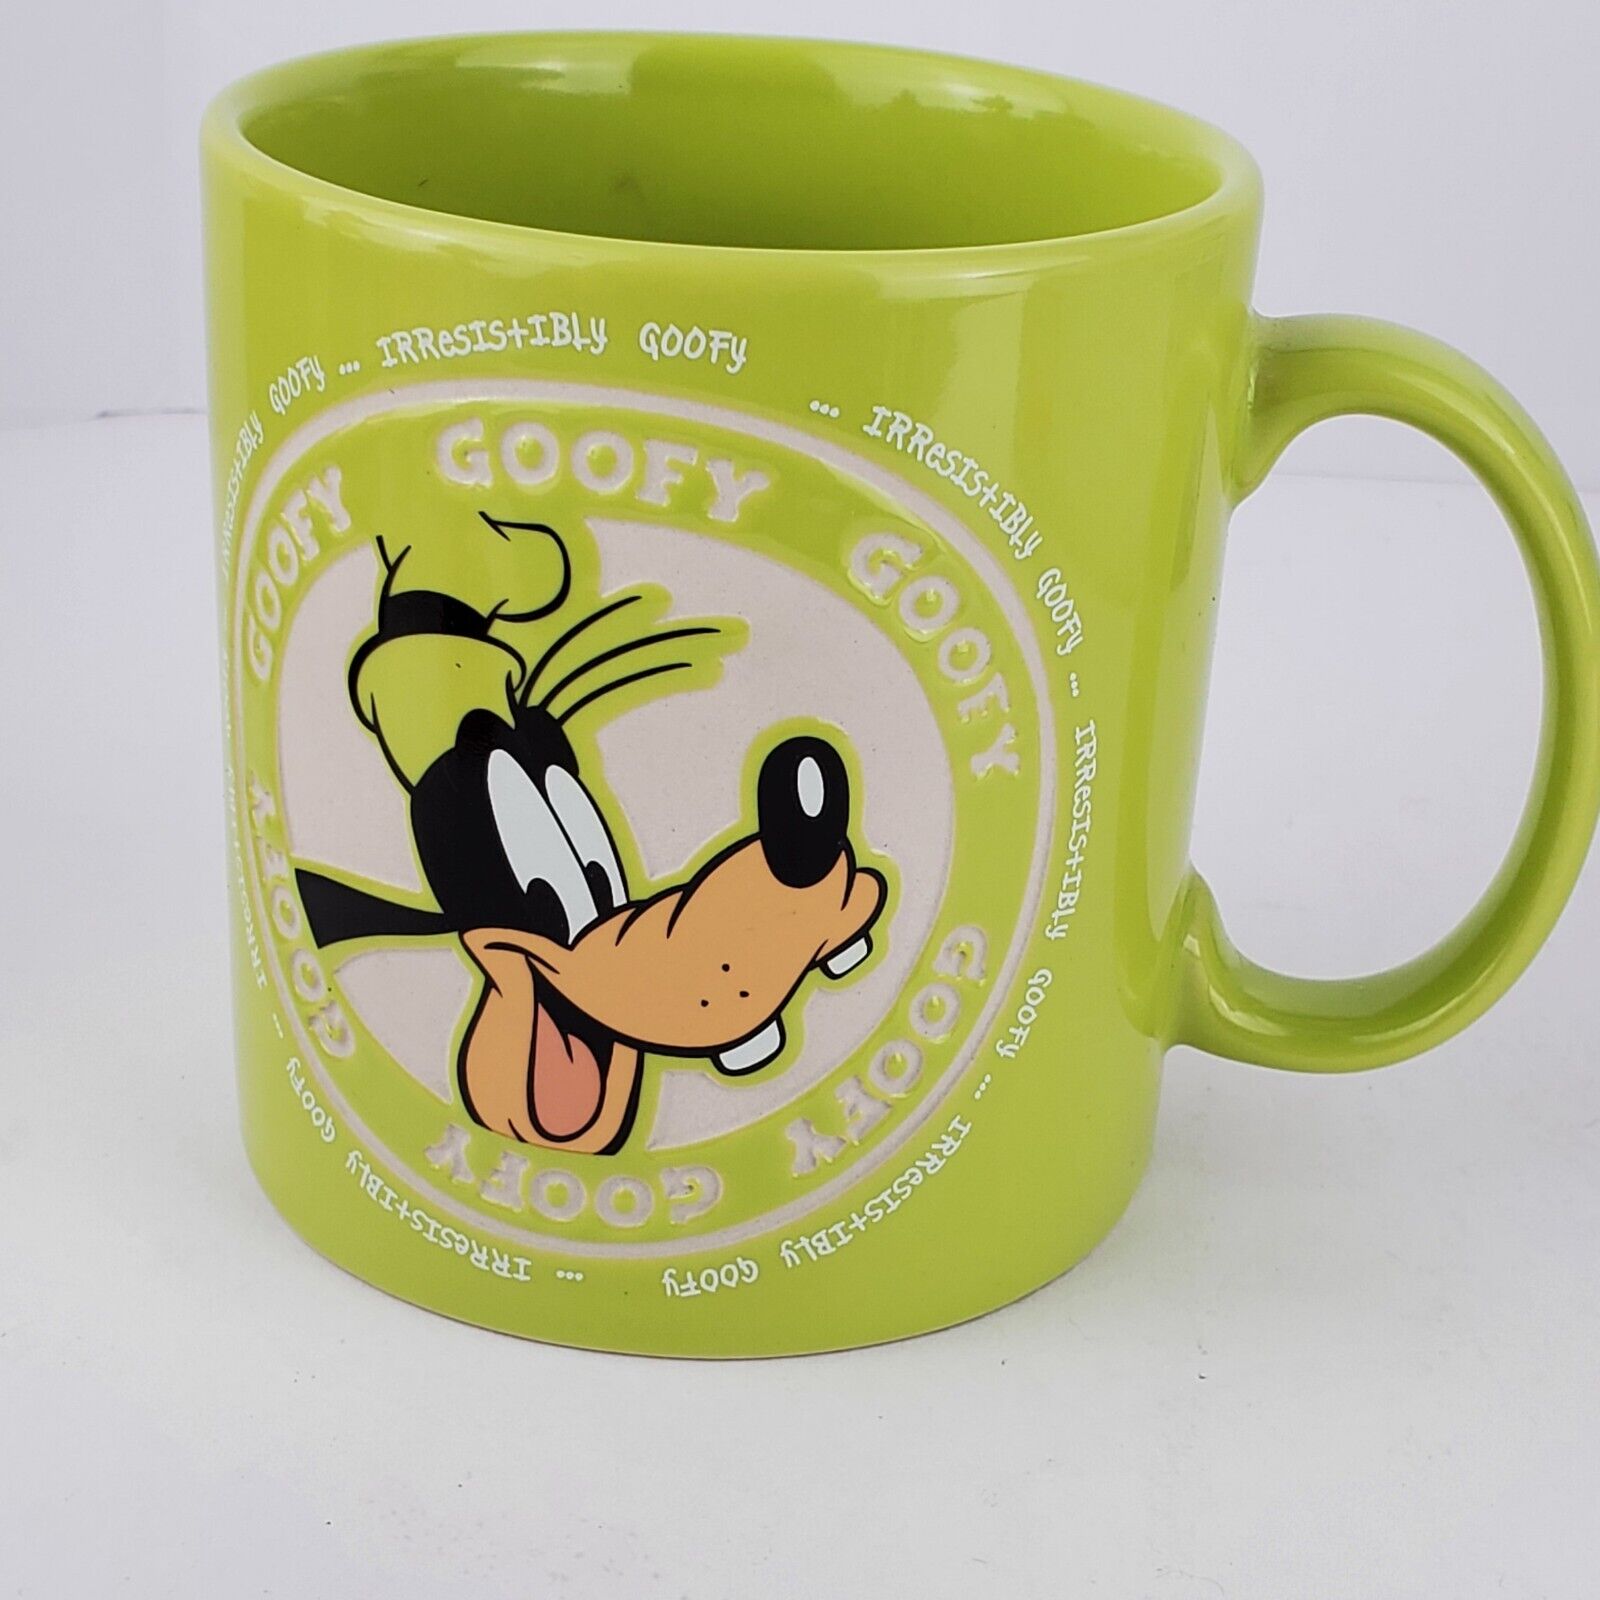 Authentic Disney Parks 3-D Goofy Mug Vibrant Lime Green Irresistibly Goofy